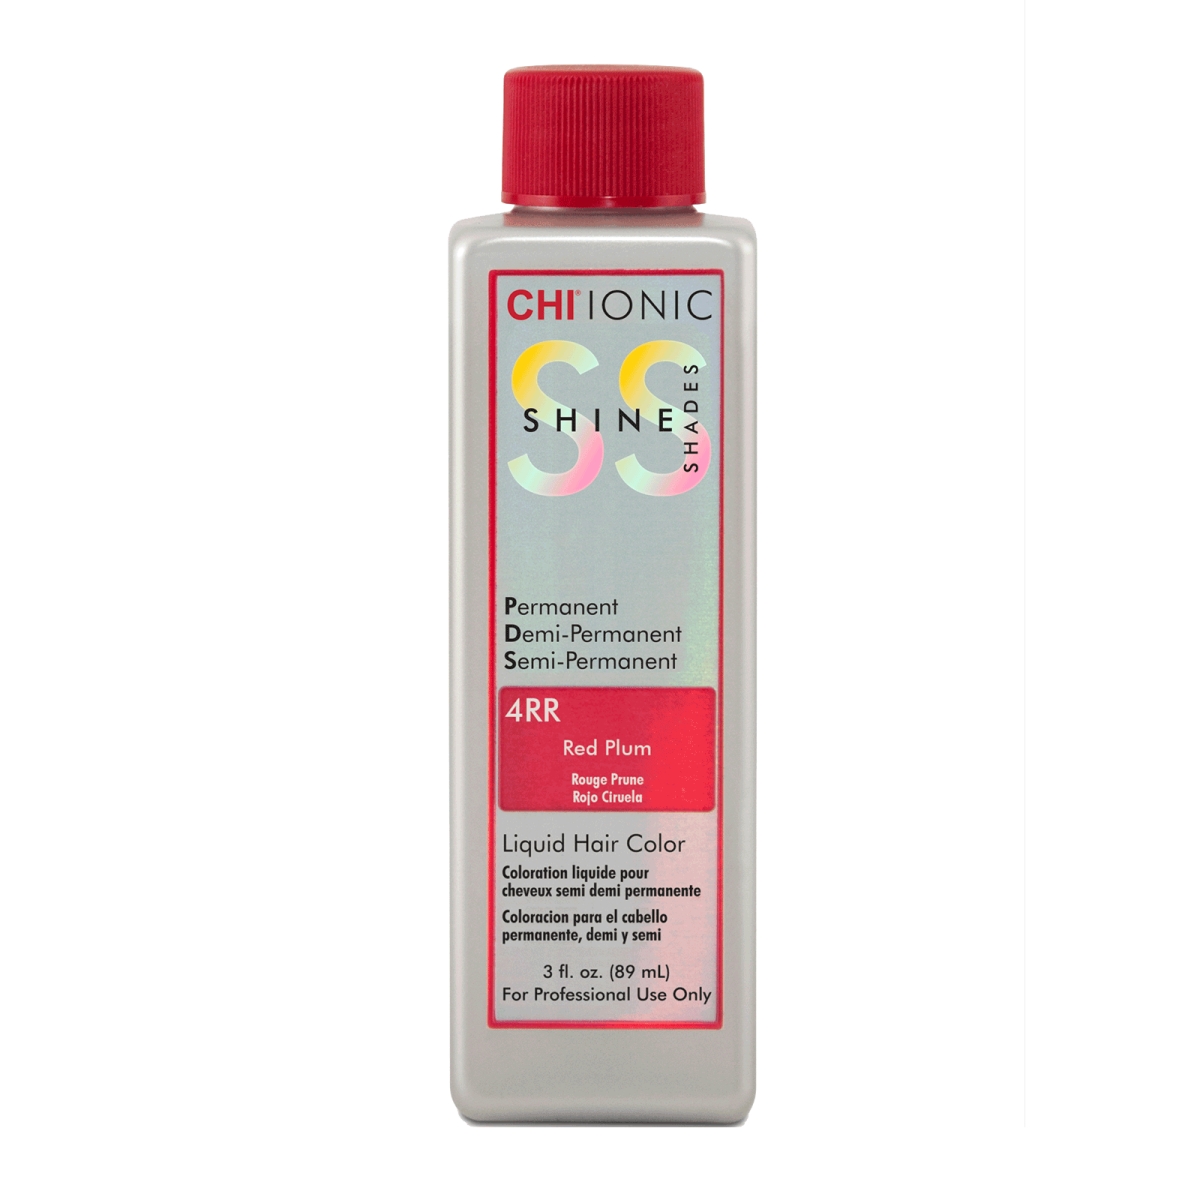 I0084013 Ionic Shine Shades Liquid Hair Color For Unisex - 4rr Red Plum - 3 Oz